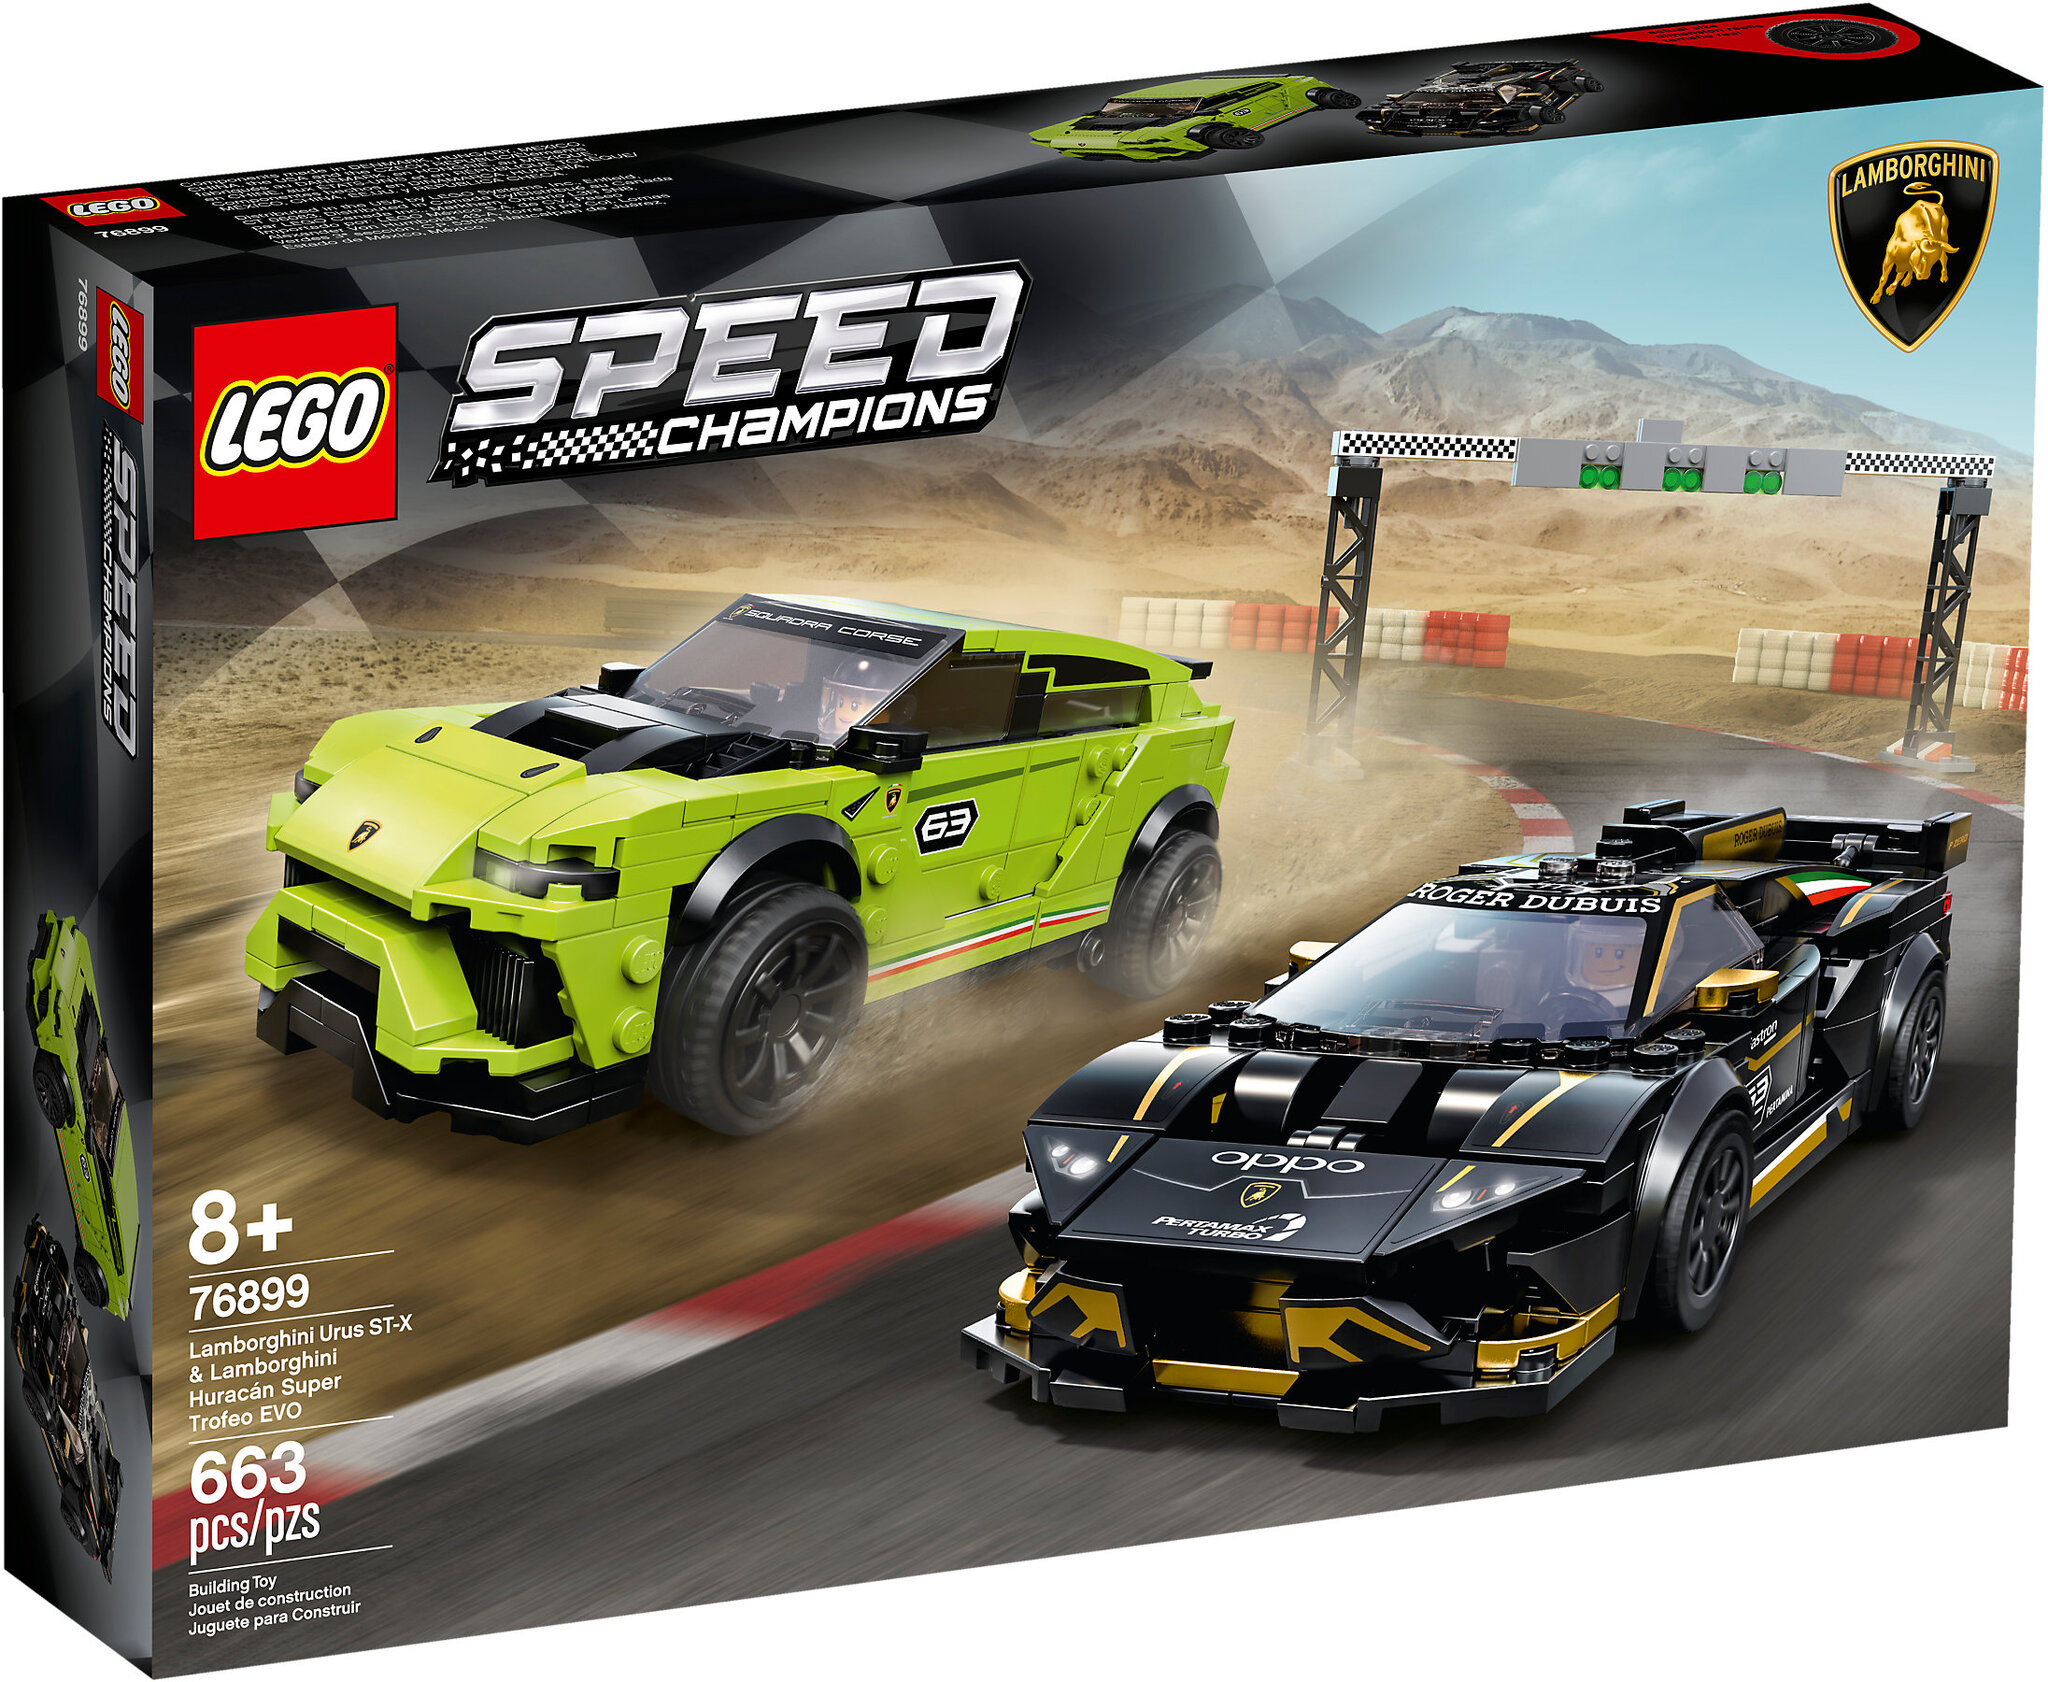 LEGO Speed Champions 76899 - Lamborghini Urus St X & Lamborghini Huracán  Super Trofeo Evo